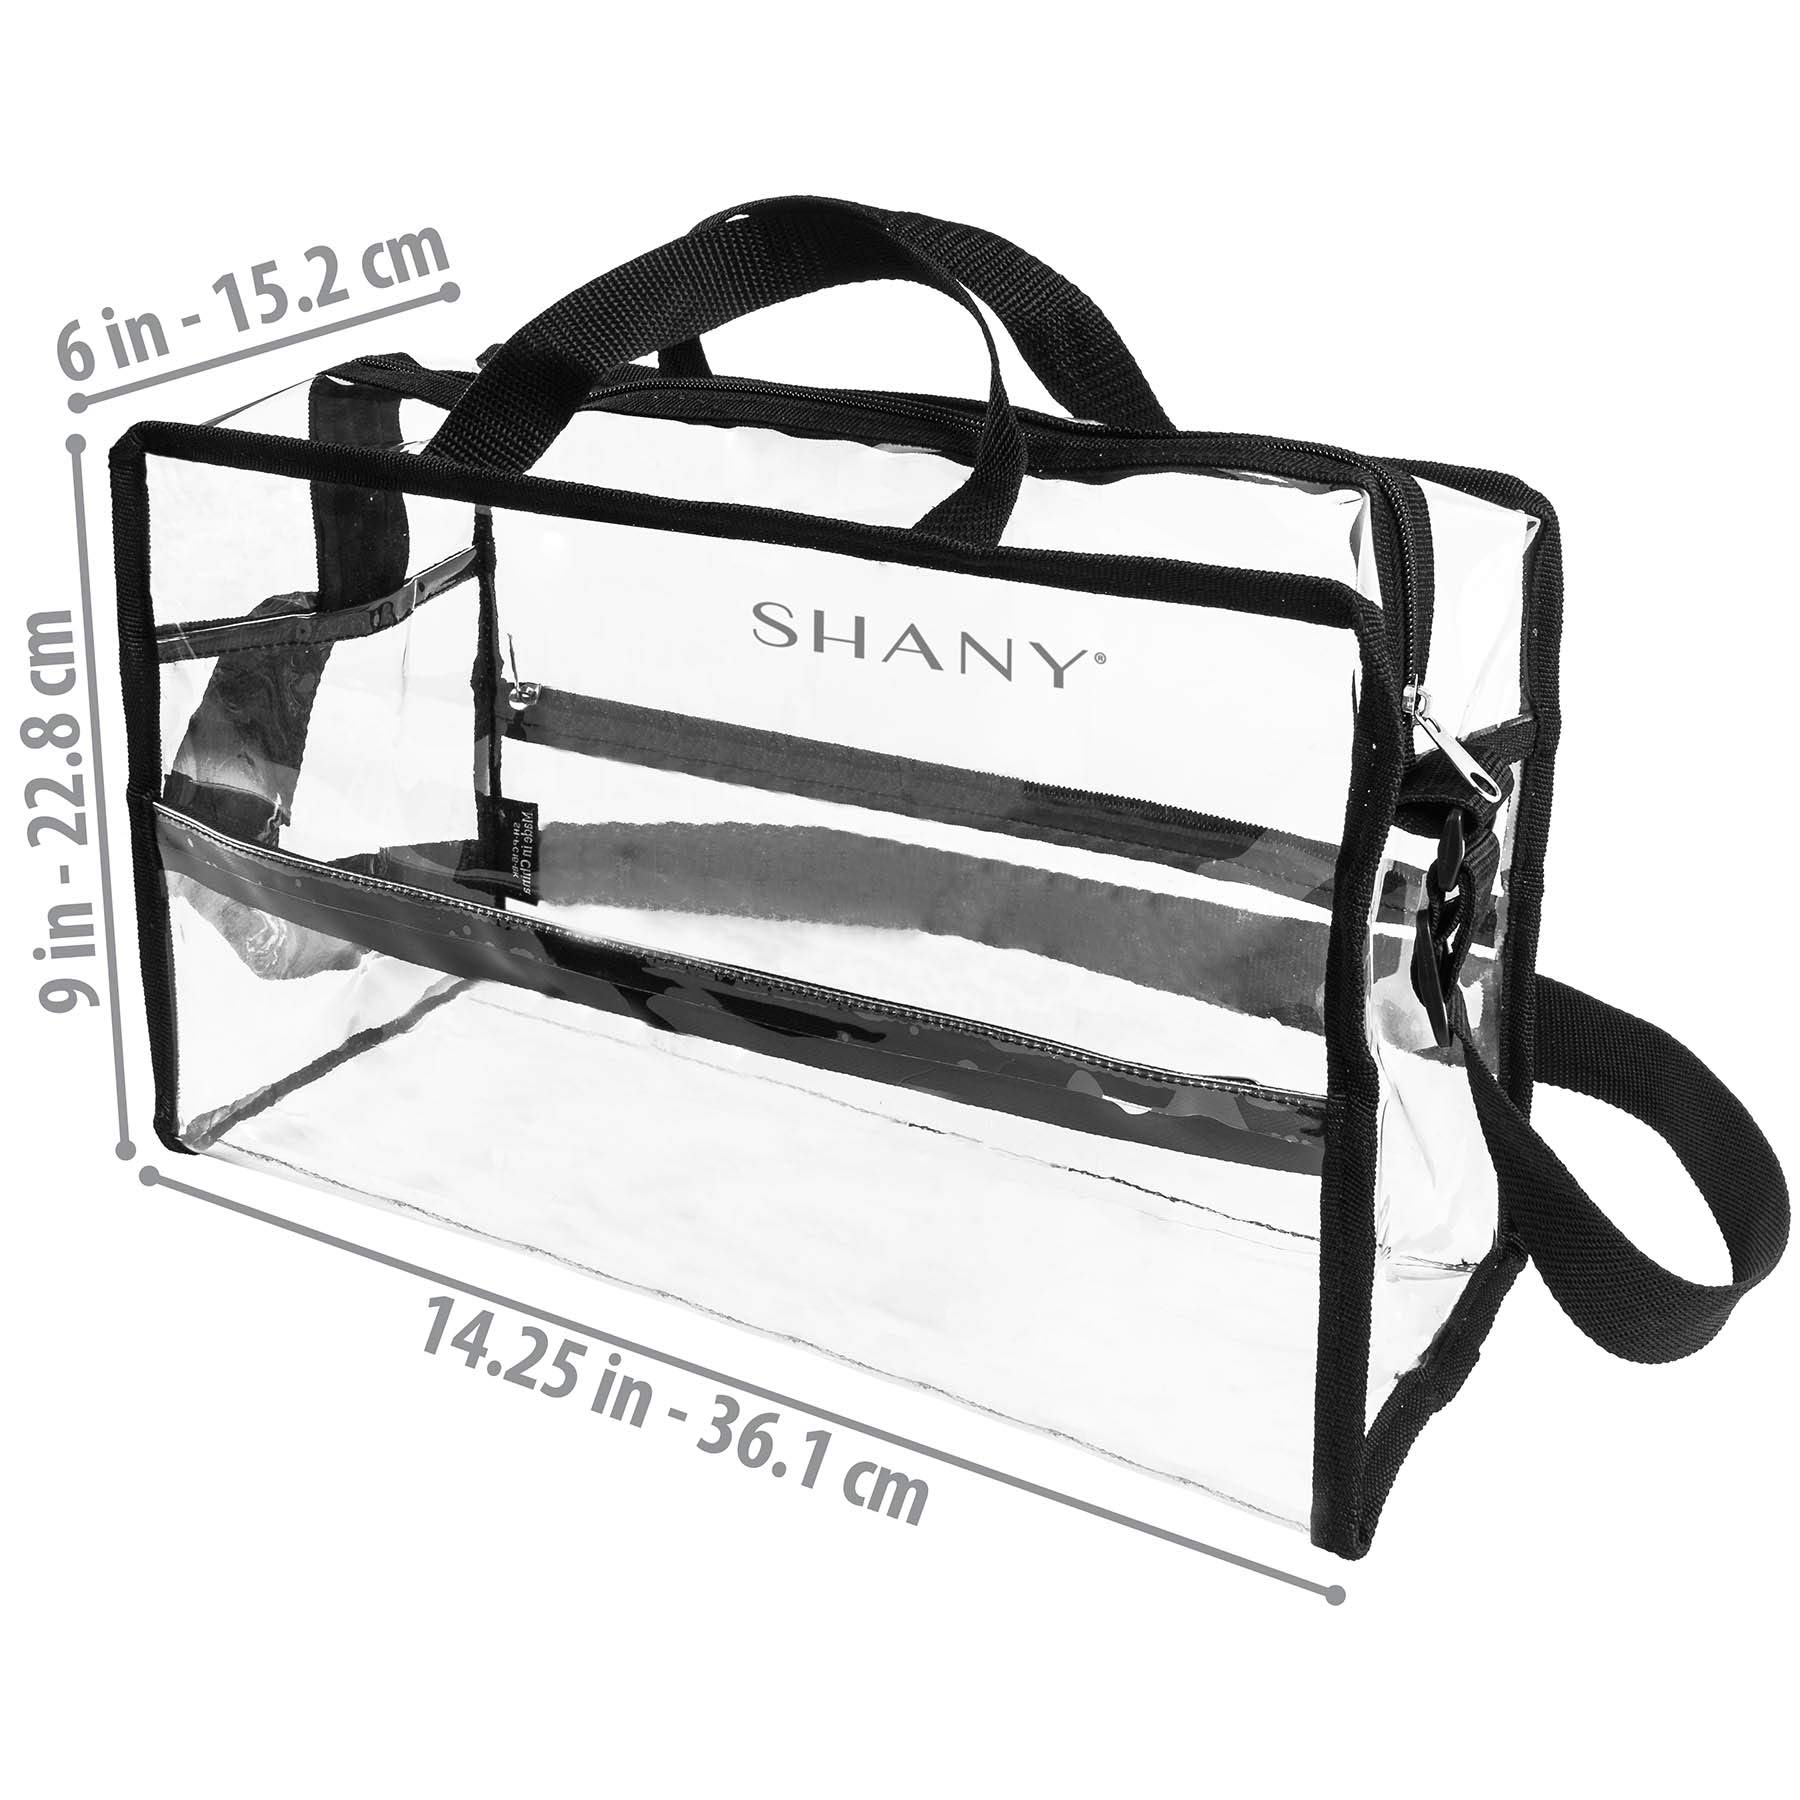 SHANY Cosmetics Bag